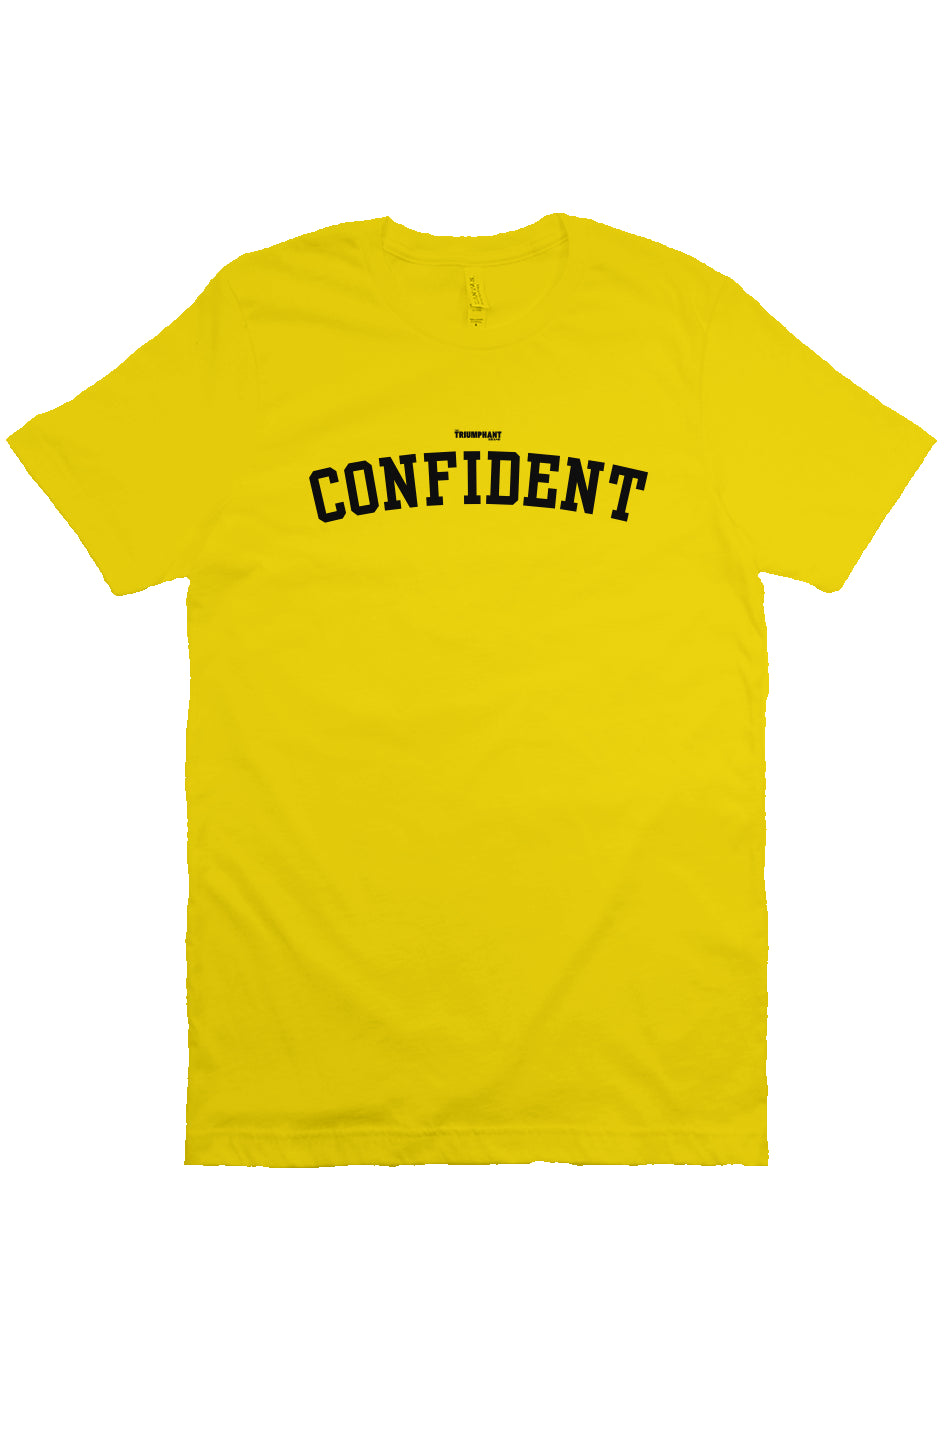 Confident | A&D Tee